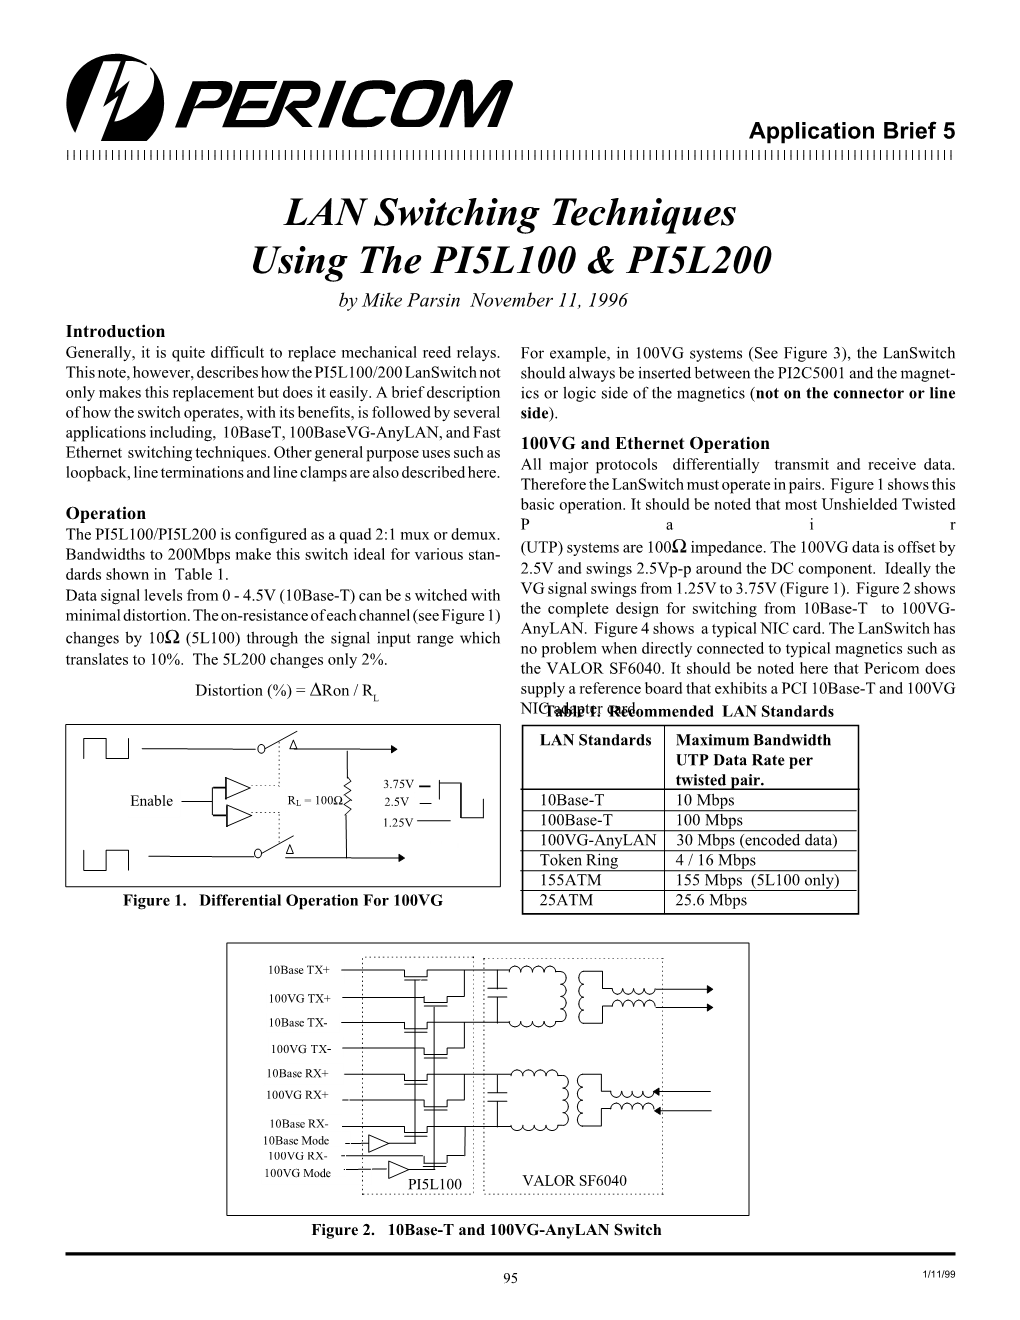 LAN Switching Techniques Using the PI5L100 & PI5L200 127 KB